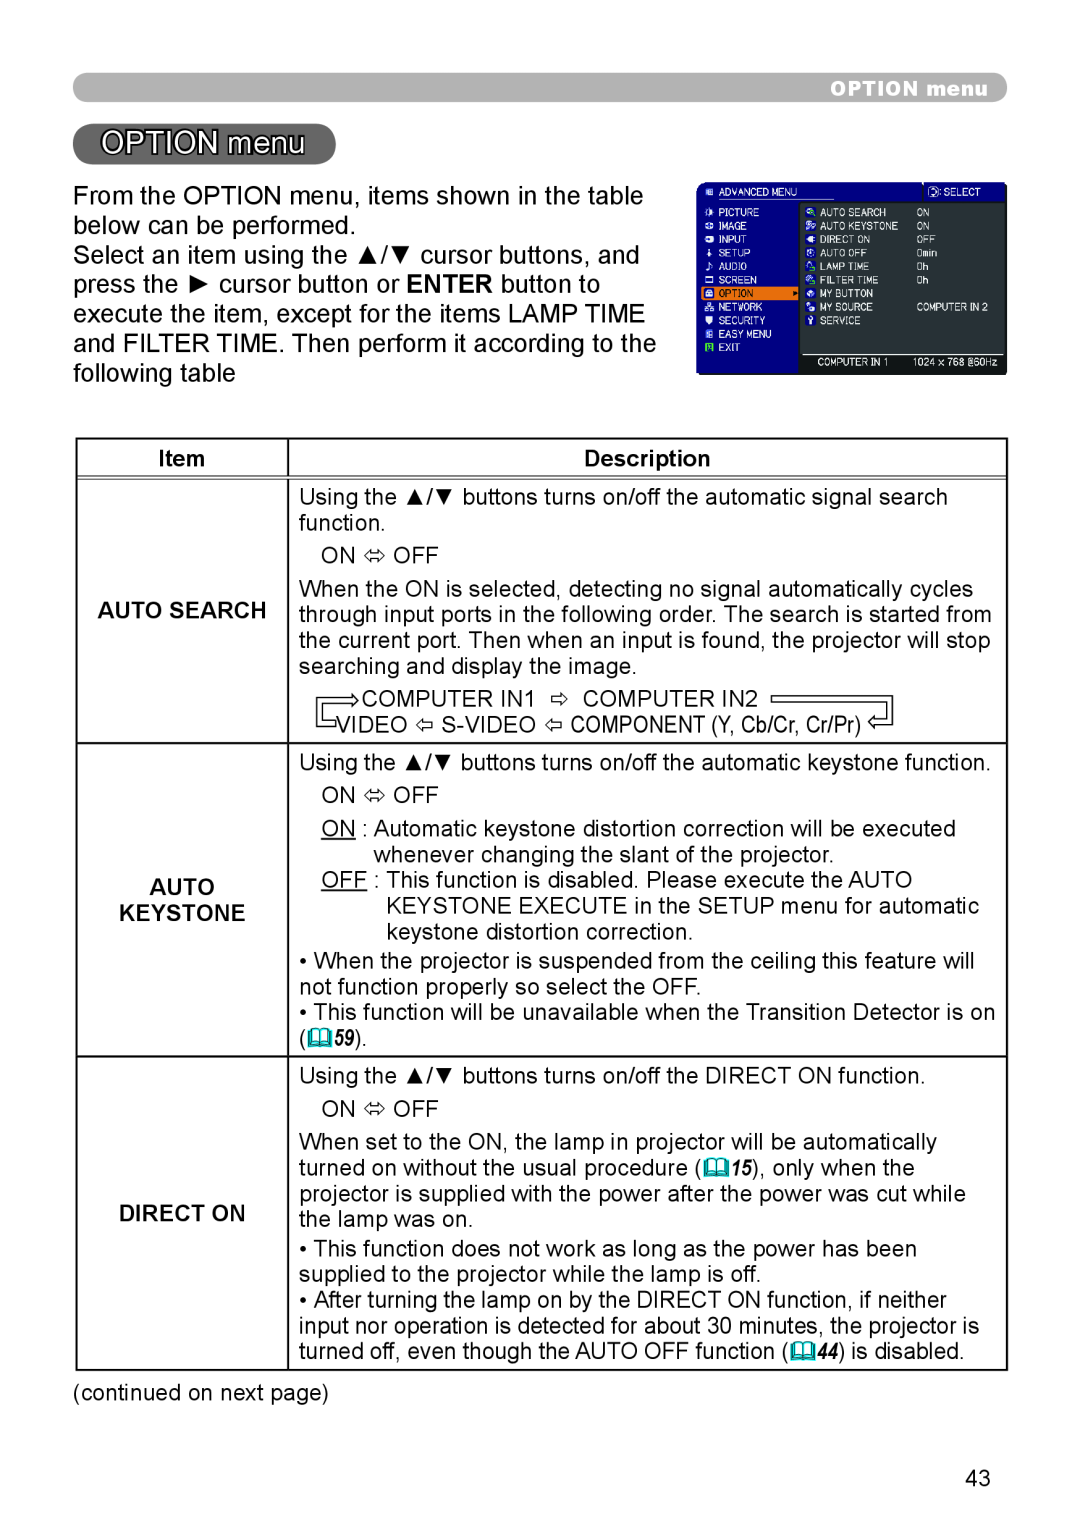 Dukane 8919H-RJ, 8920H-RJ, 8755J-RJ user manual OPTION menu, Description, Auto Search, Keystone, Direct On 